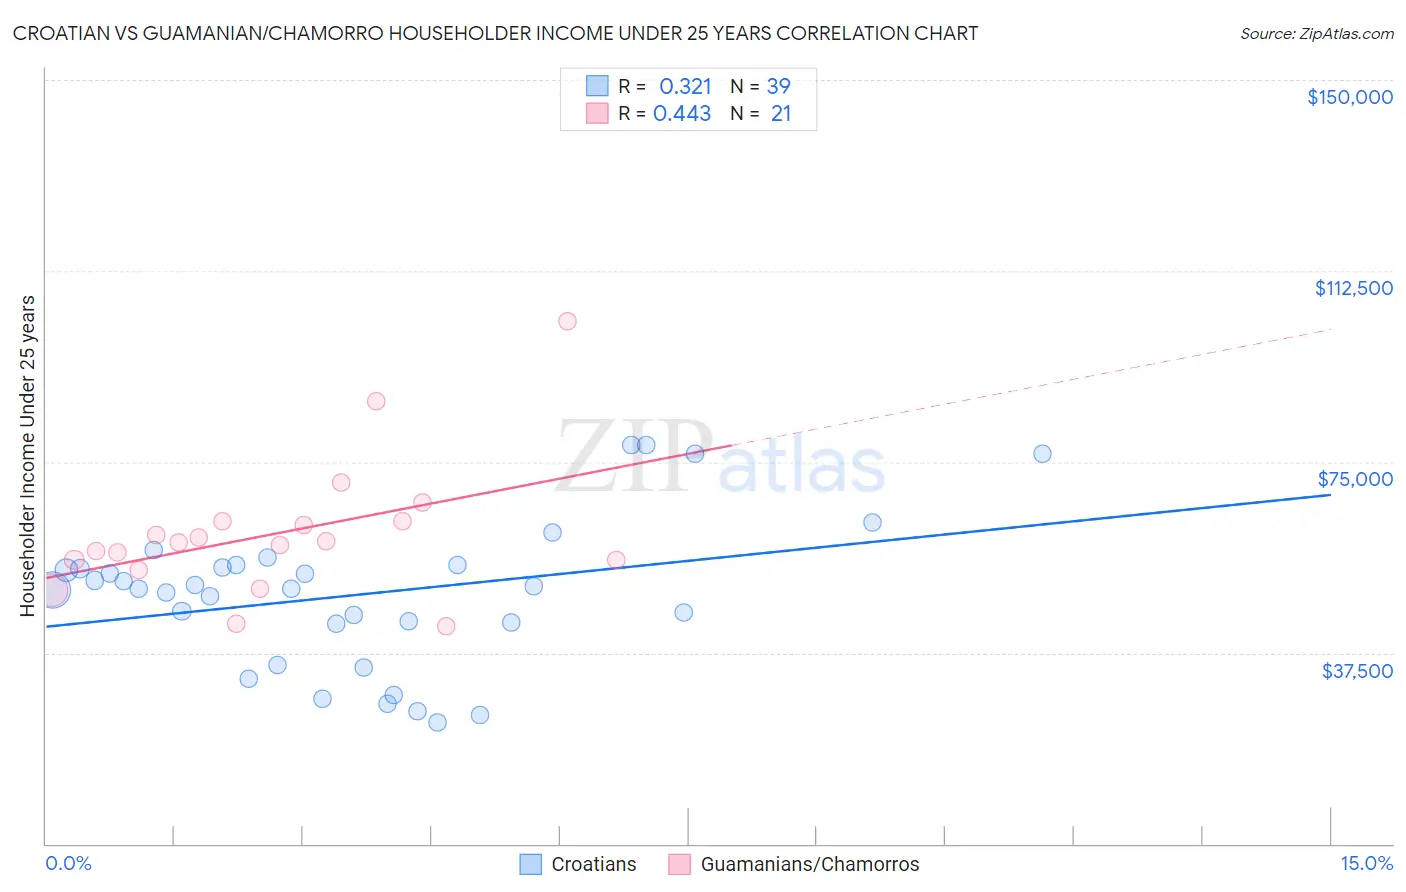 Croatian vs Guamanian/Chamorro Householder Income Under 25 years